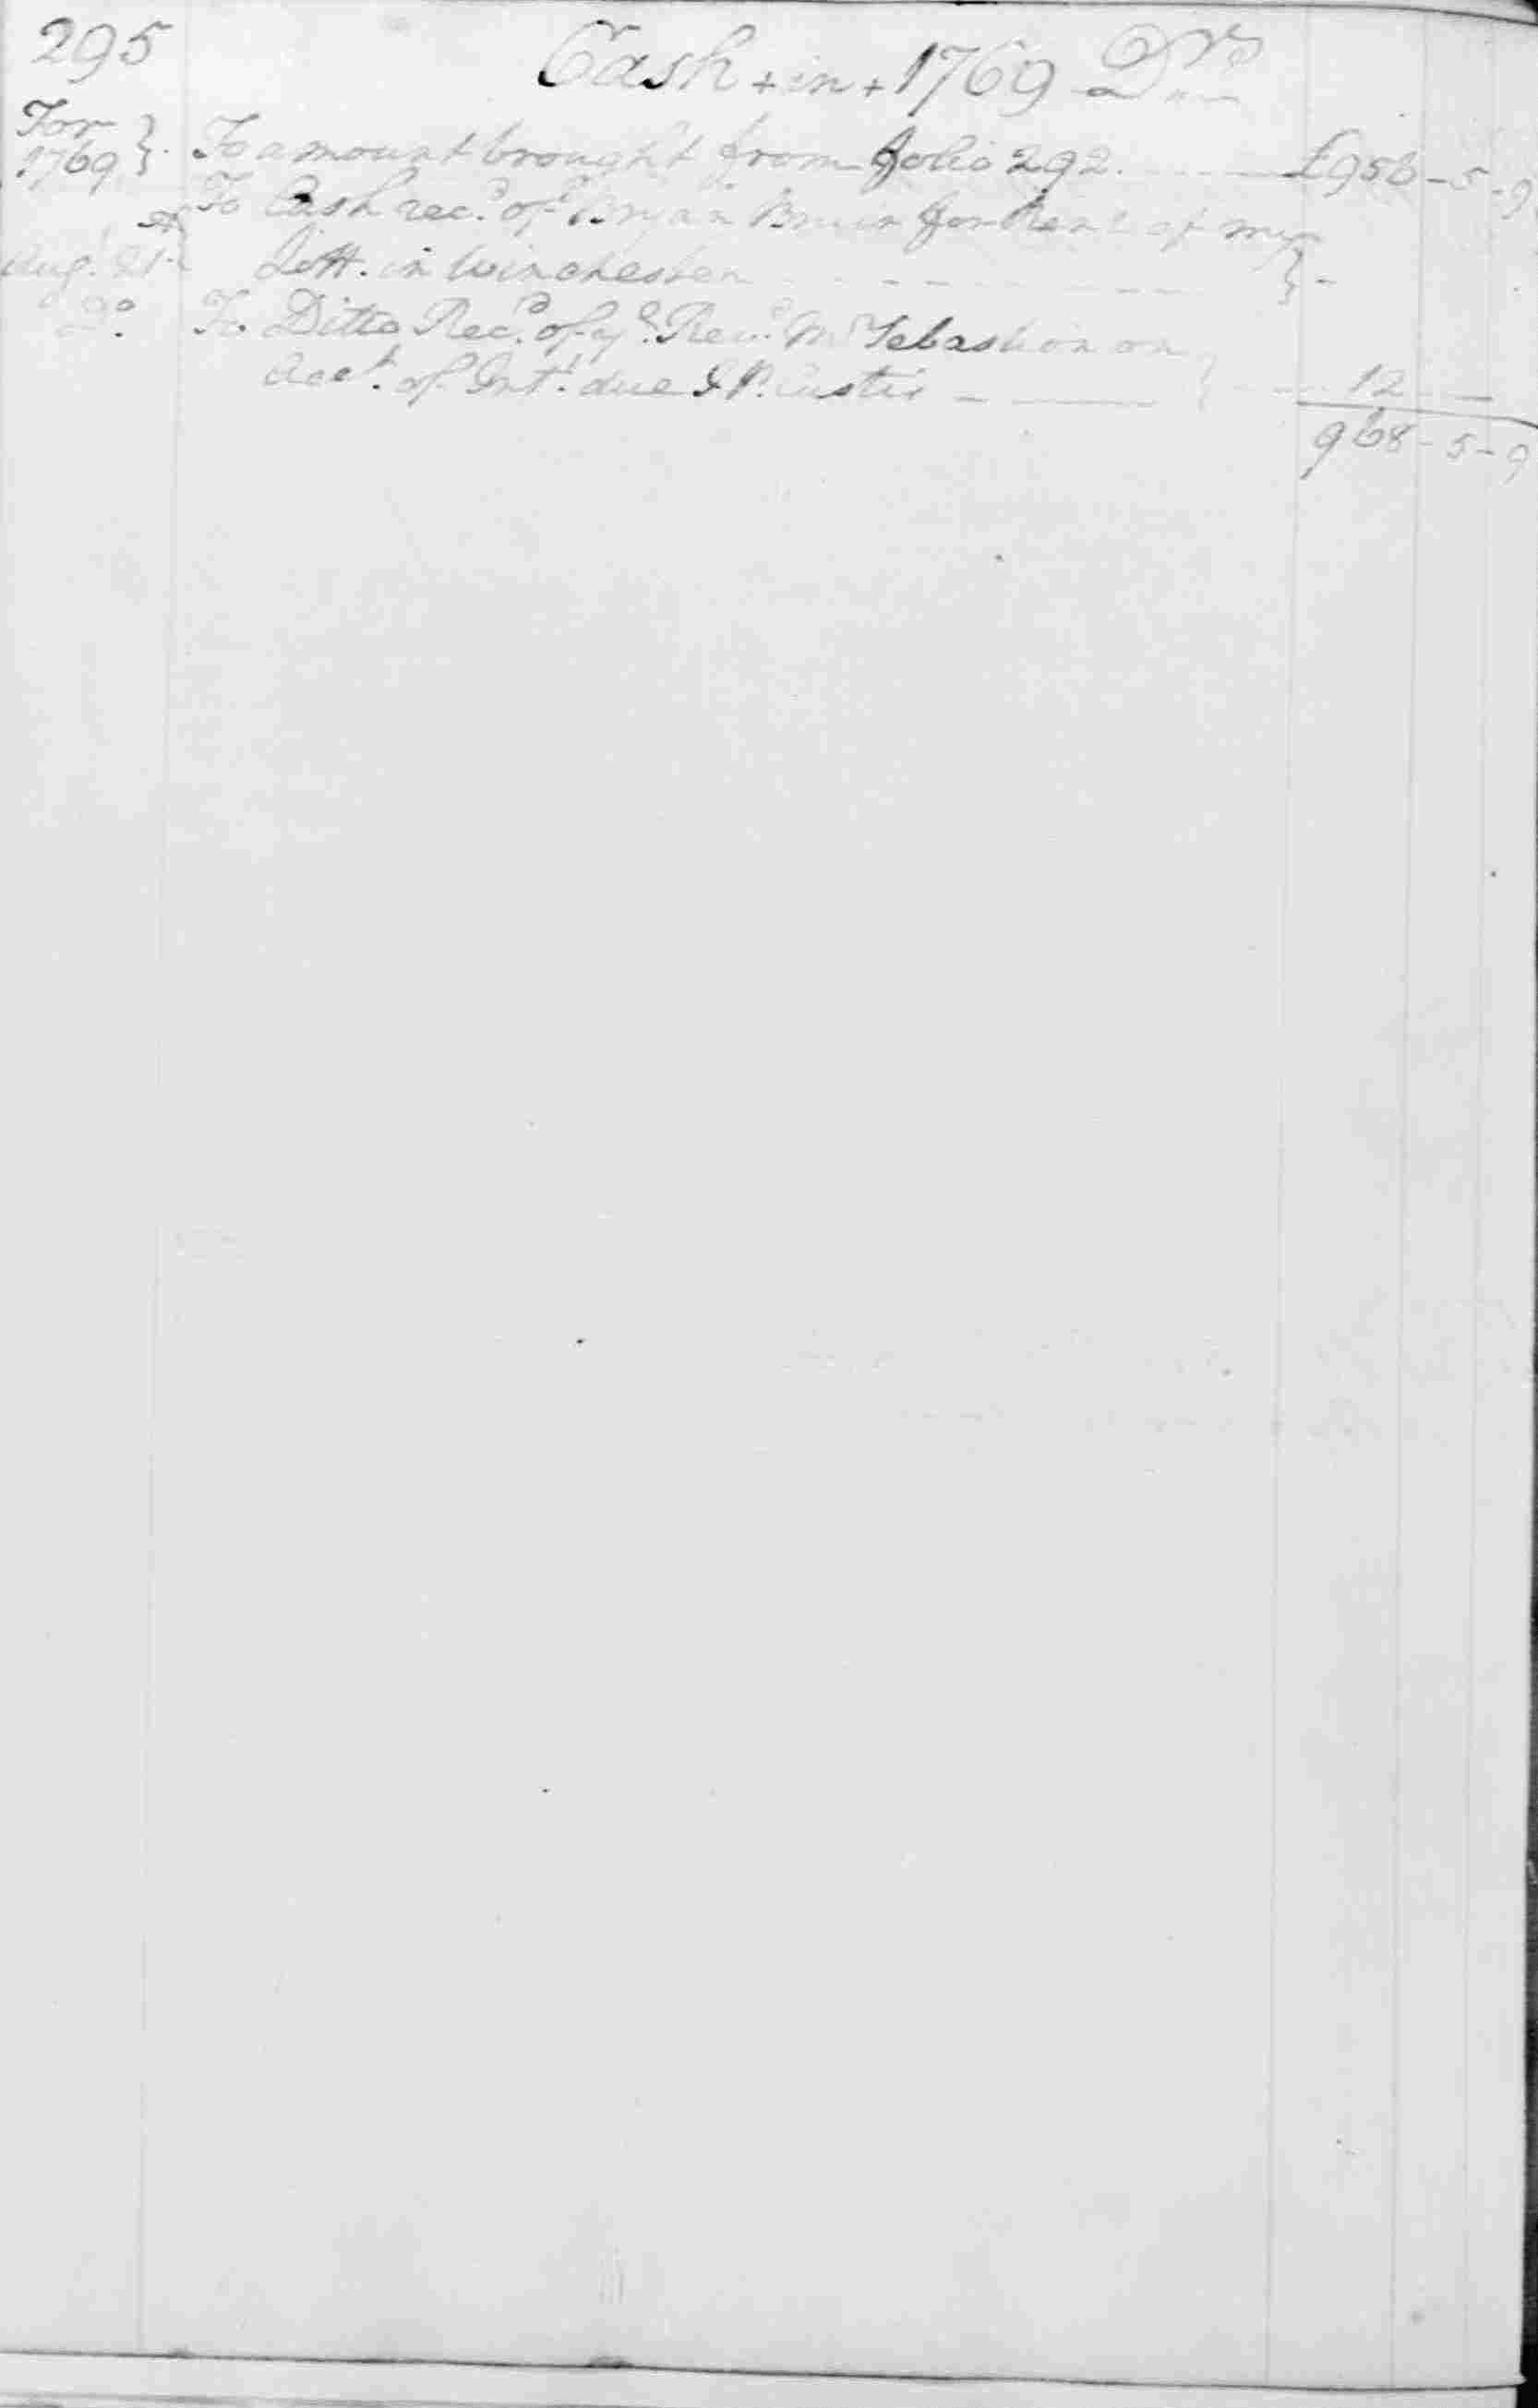 Ledger A, folio 295, left side